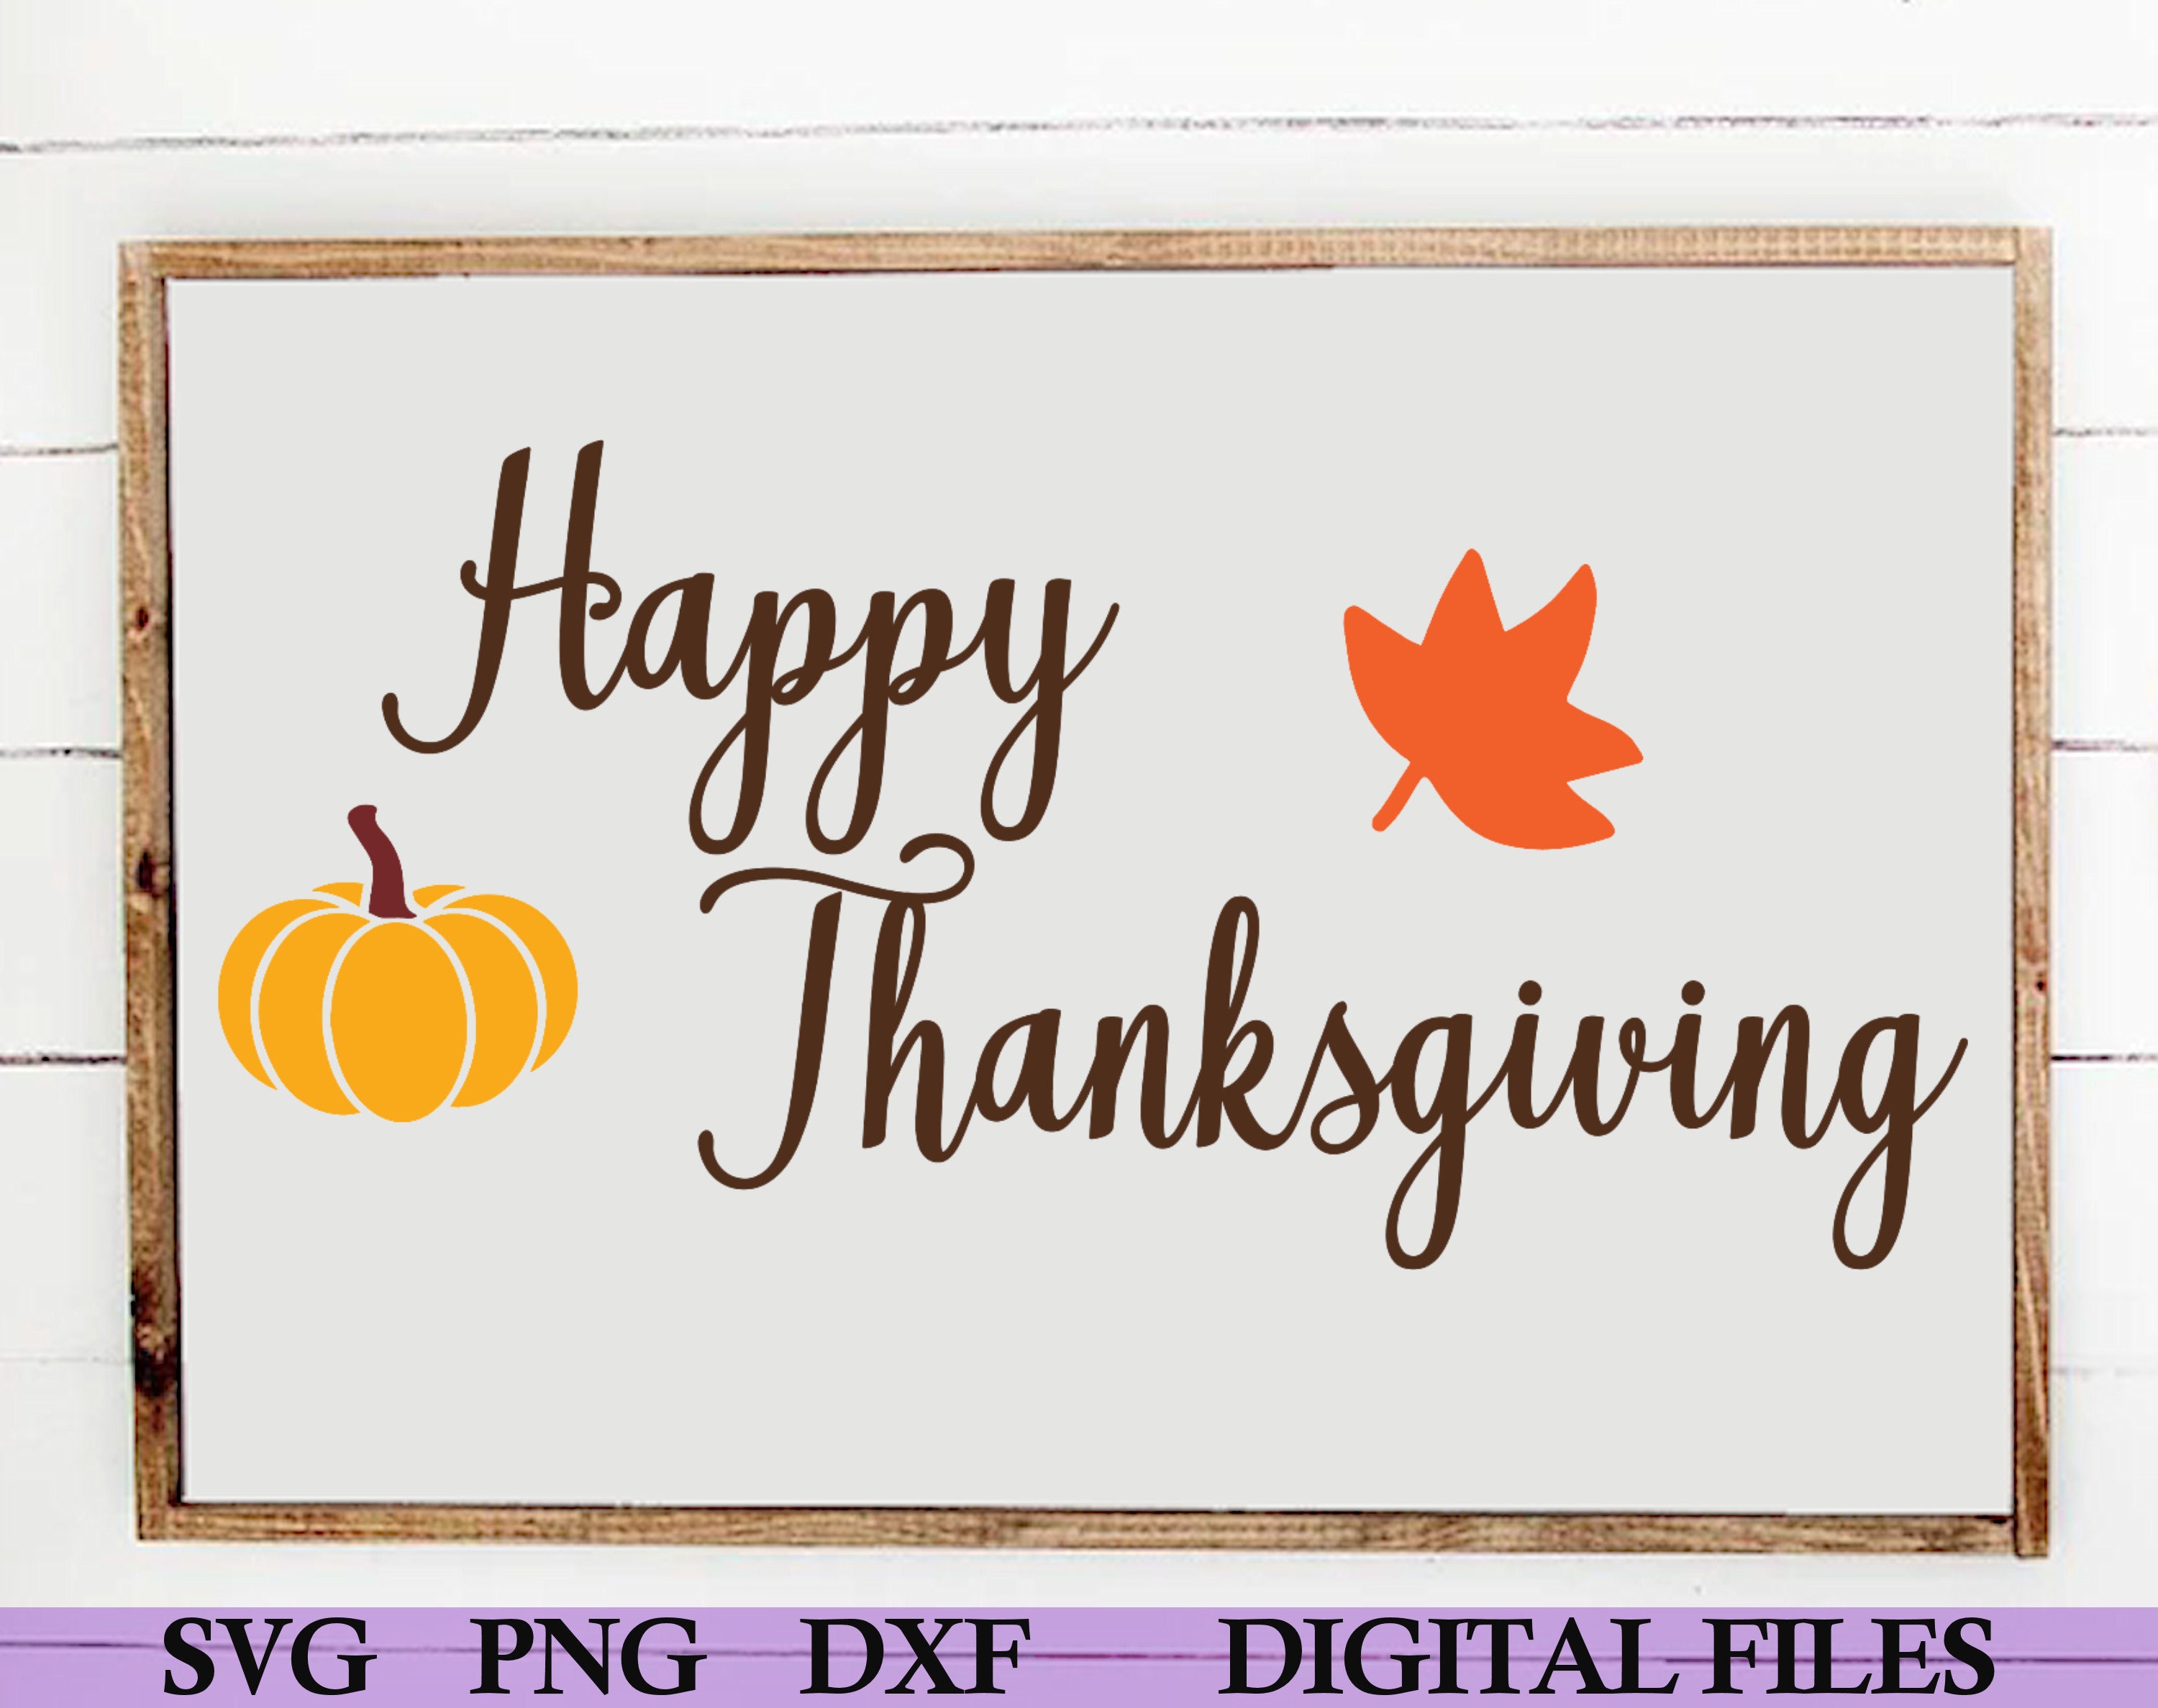 Happy Thanksgiving Cut File Svg SilhouetteCricutSvg Files | Etsy